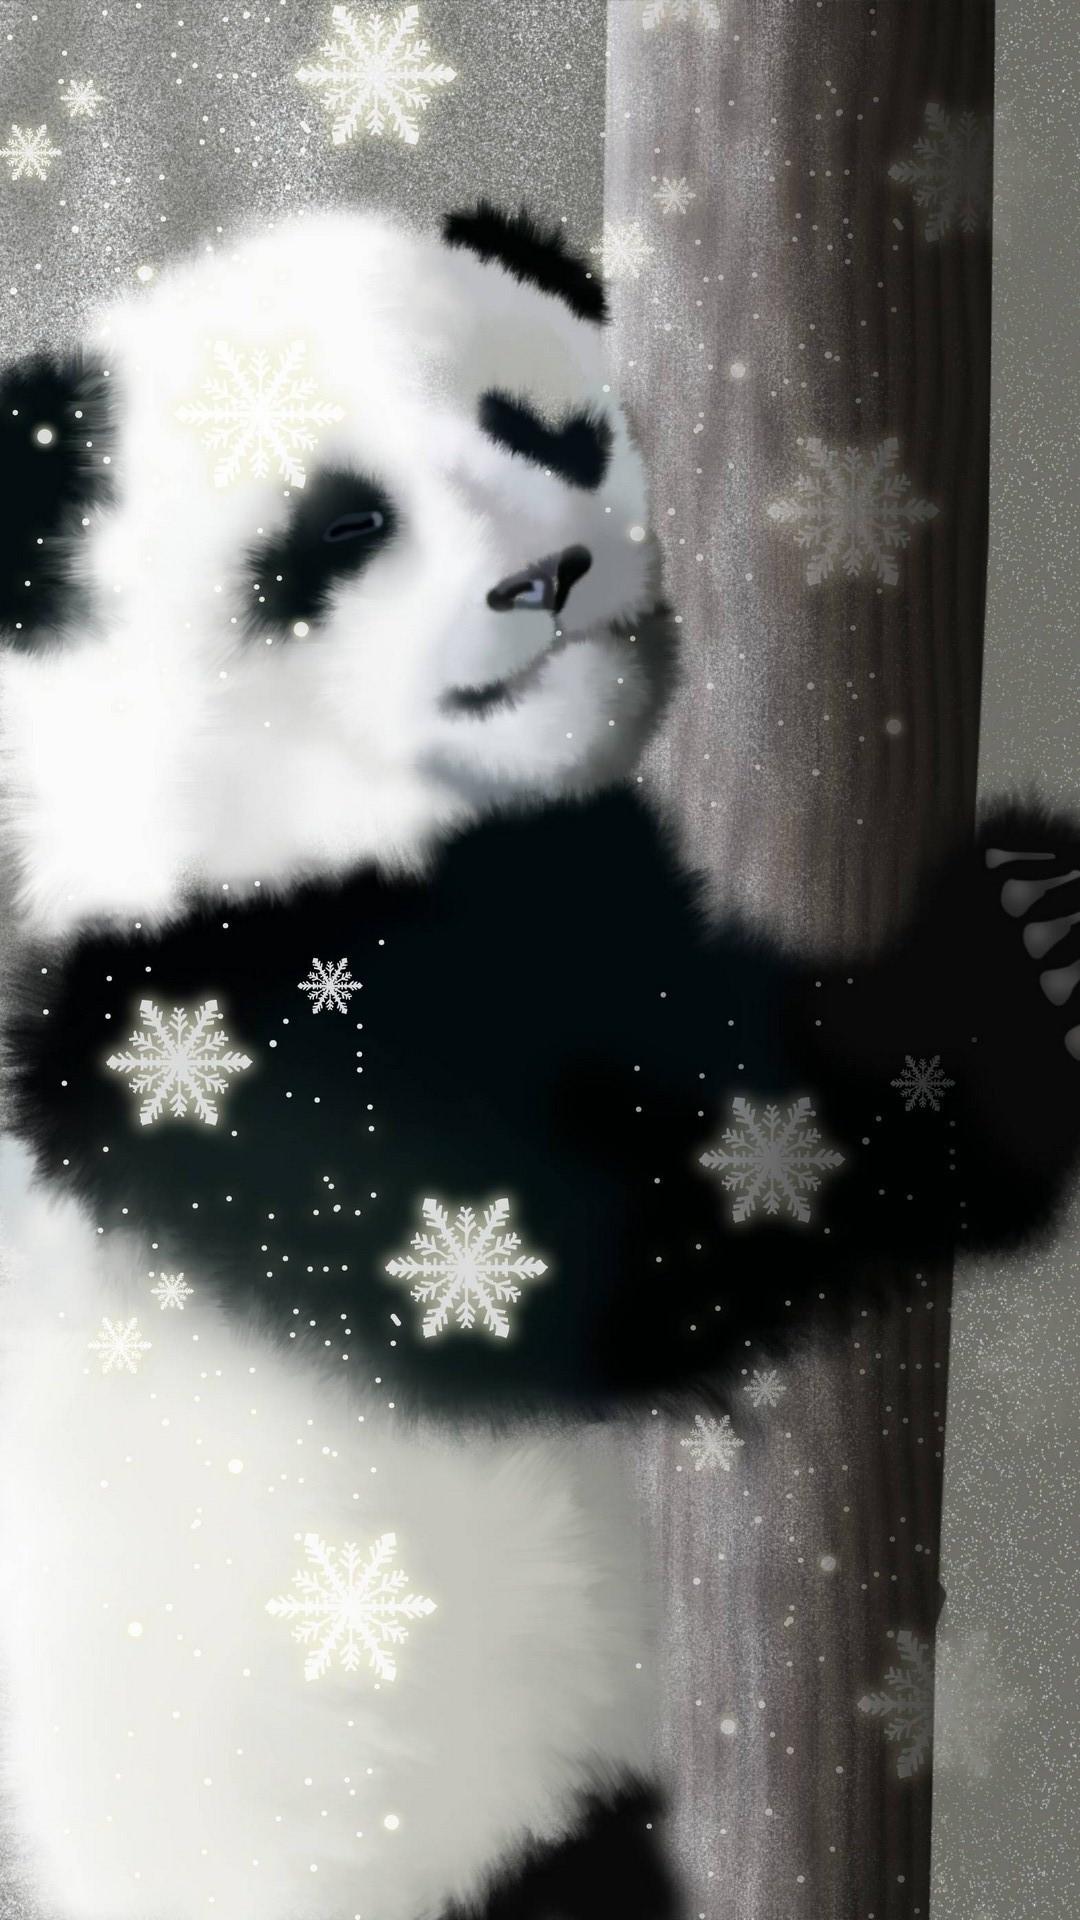 Cute Panda Wallpaper Android Android Wallpaper